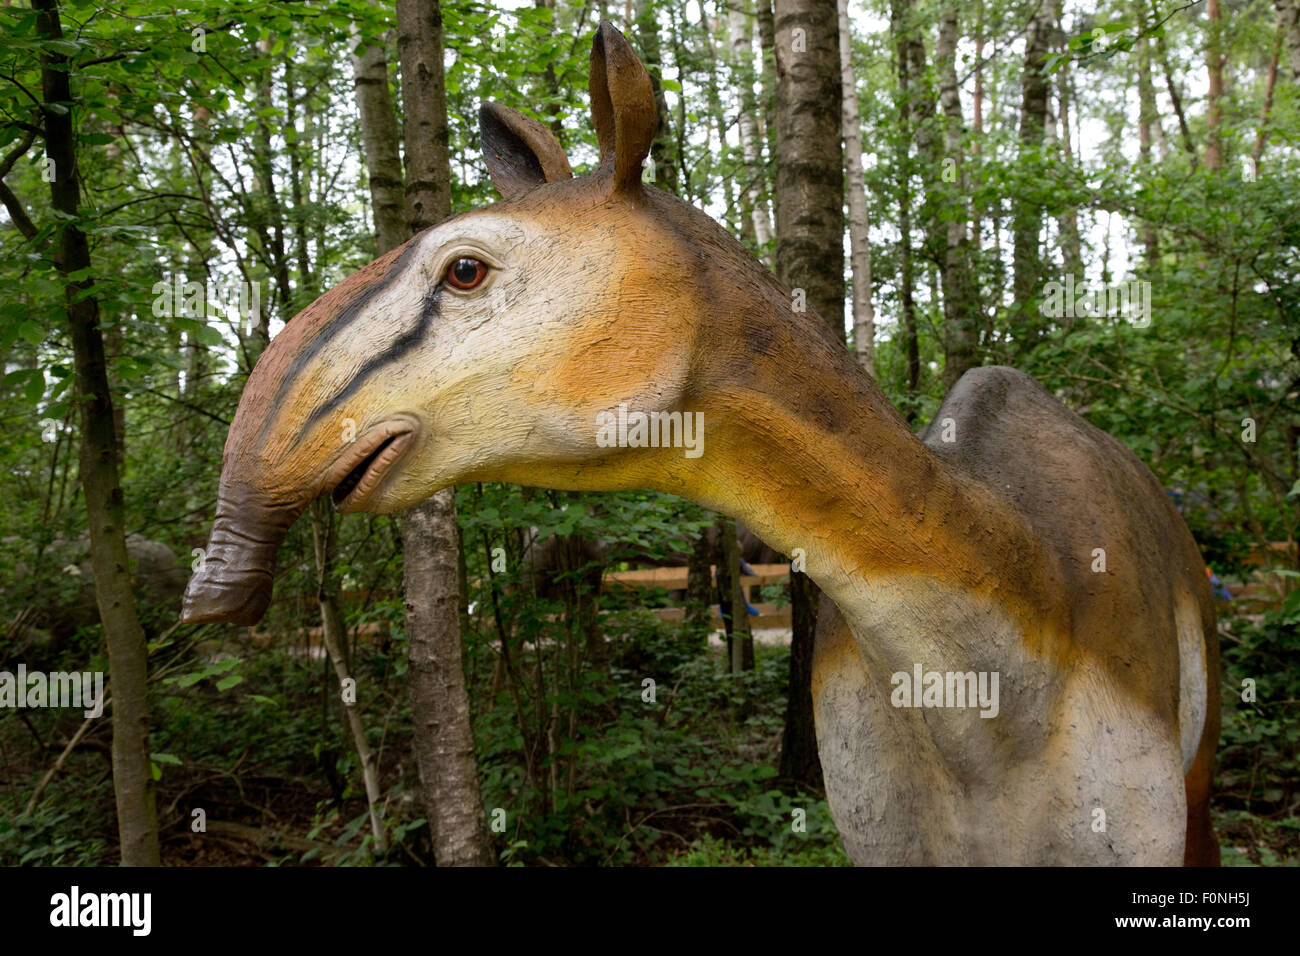 Macrauchenia largo cuello extinguidas tres dedos cada mamíferos ungulados Sudamericanos Dinosaurier Park Alemania Foto de stock